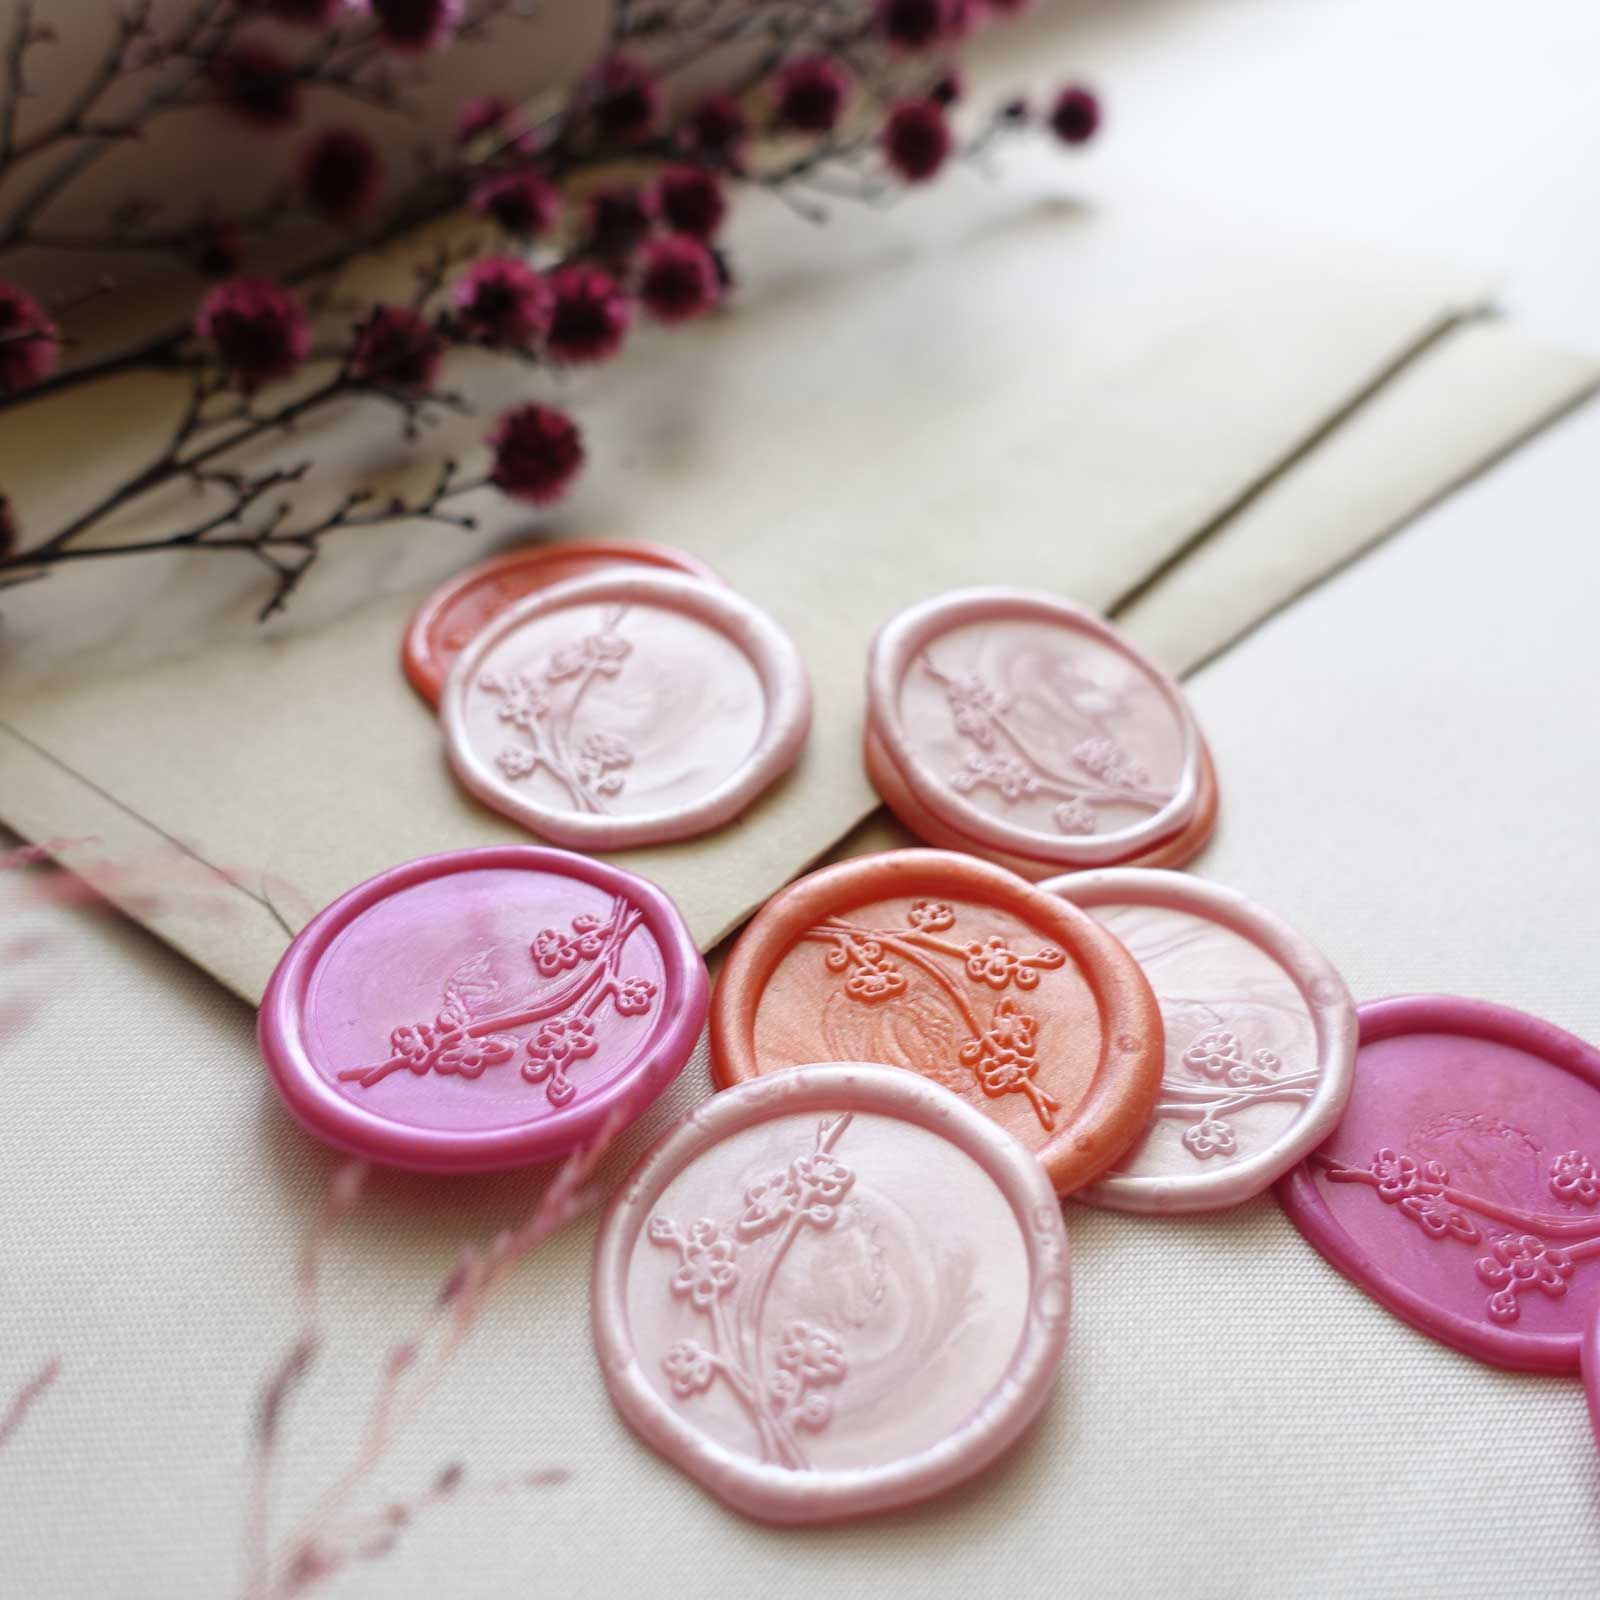 Cherry blossom sakura wax seal stamp, wax seal kit or stamp head